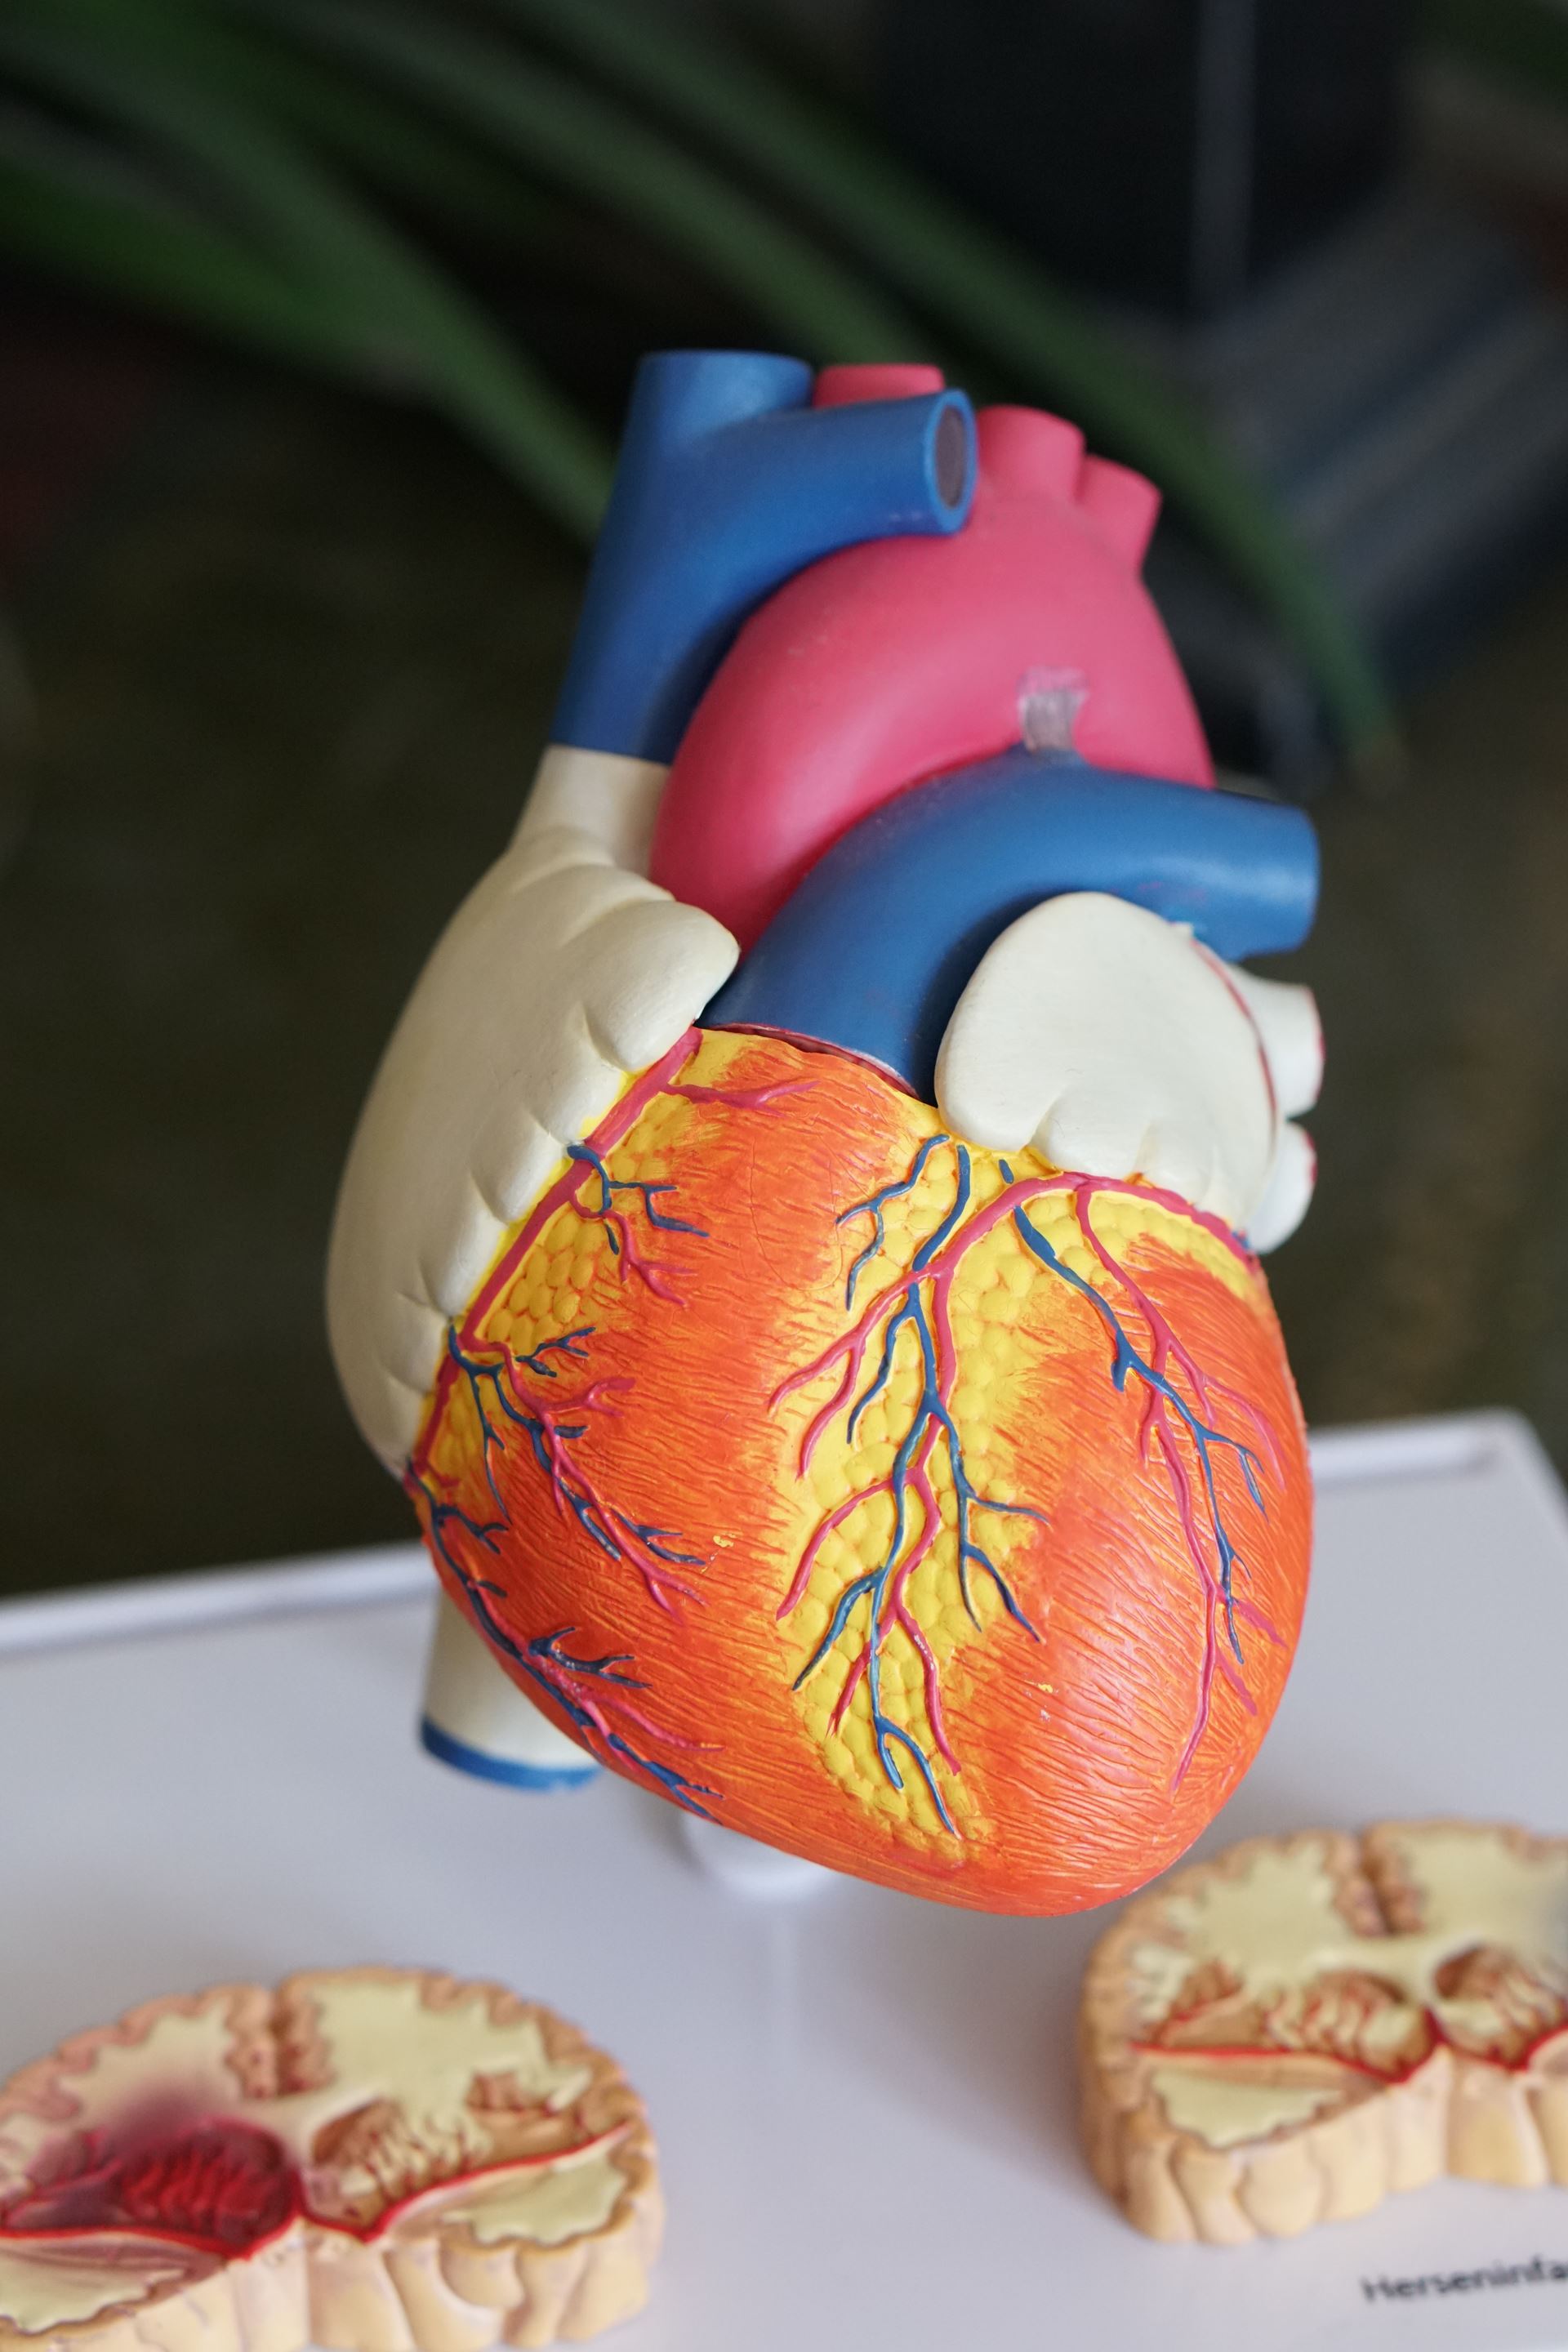 a model of a heart